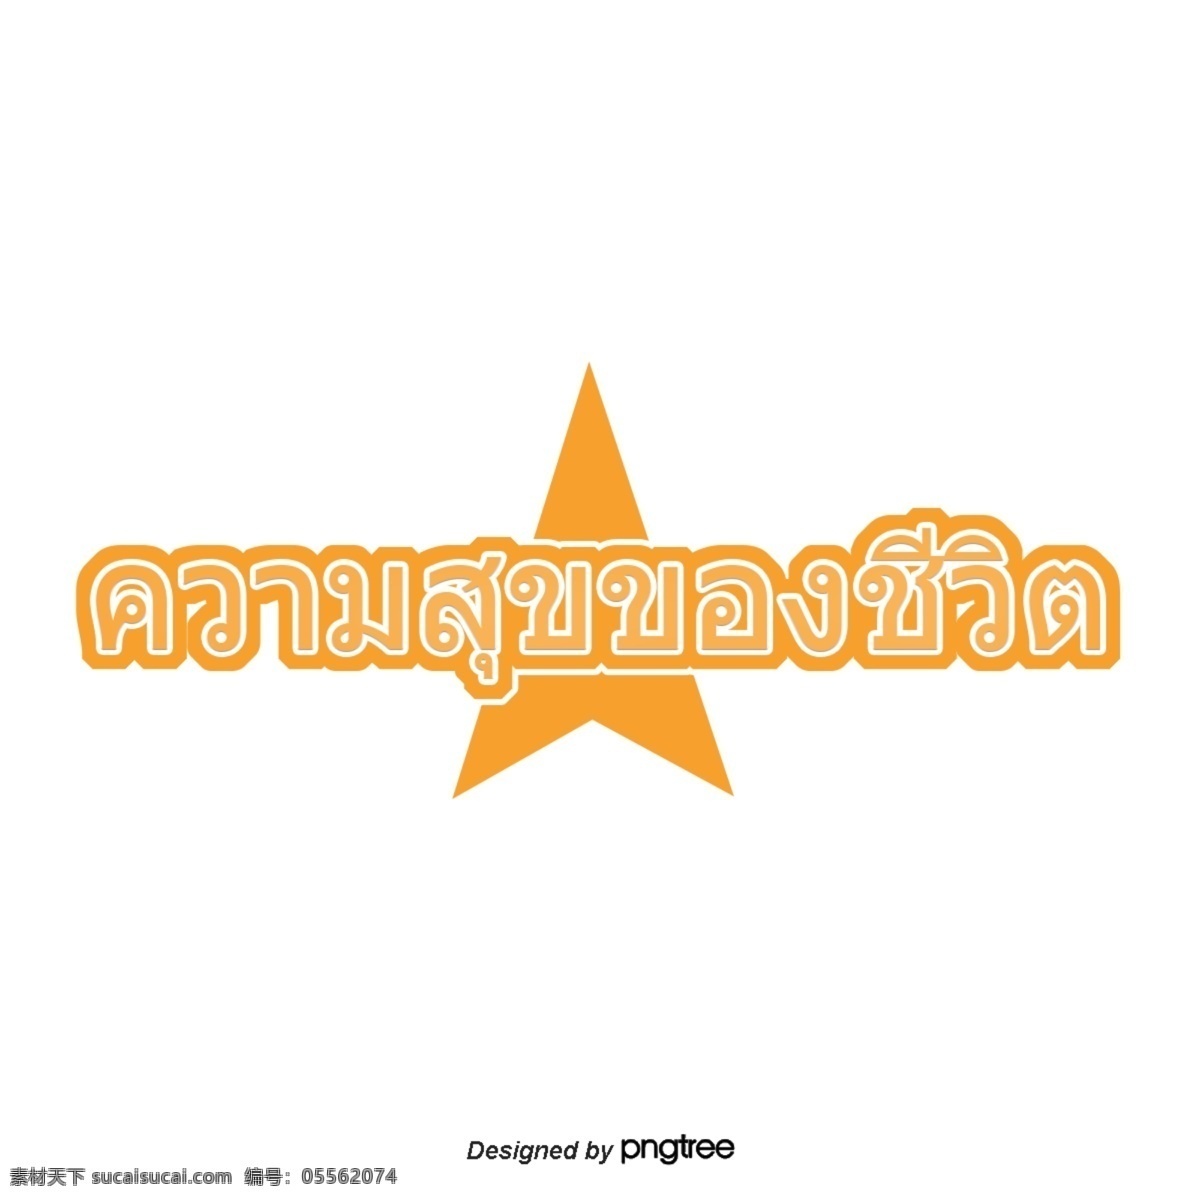 泰国 明星 黄色 字体 幸福 生活 星星 黄